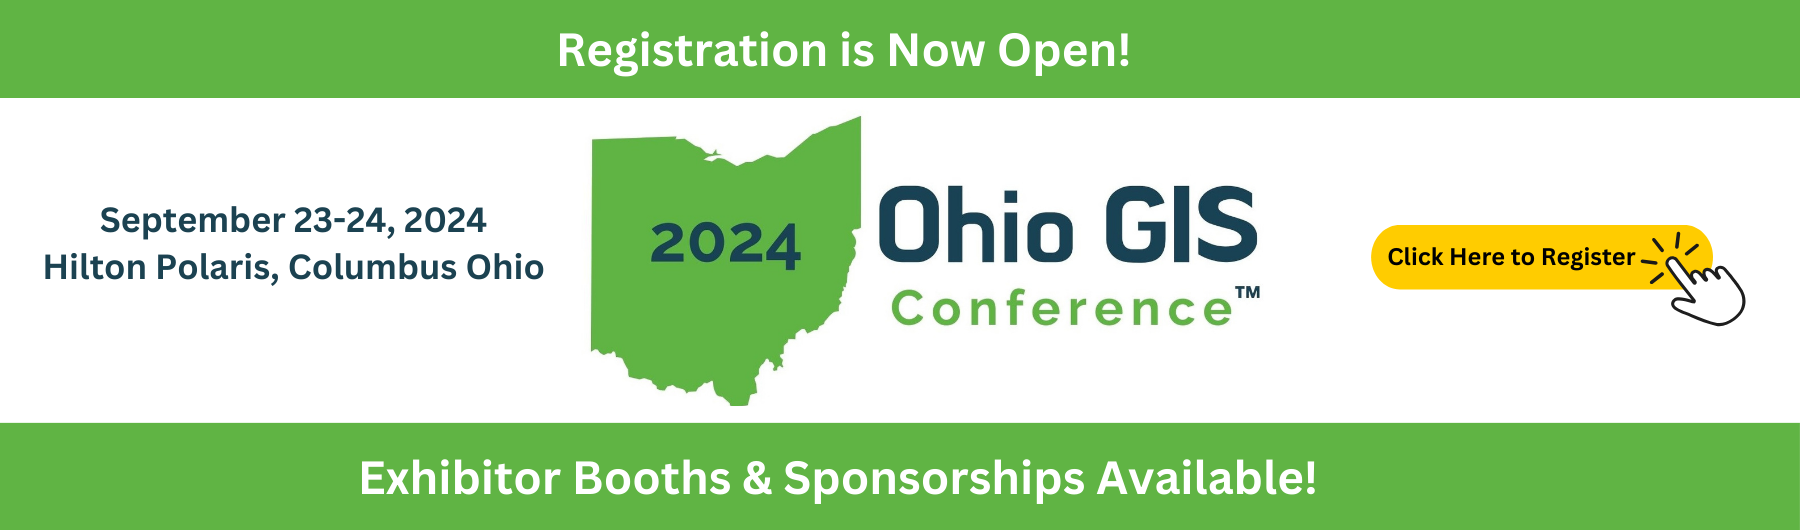 Ohio GIS Conference